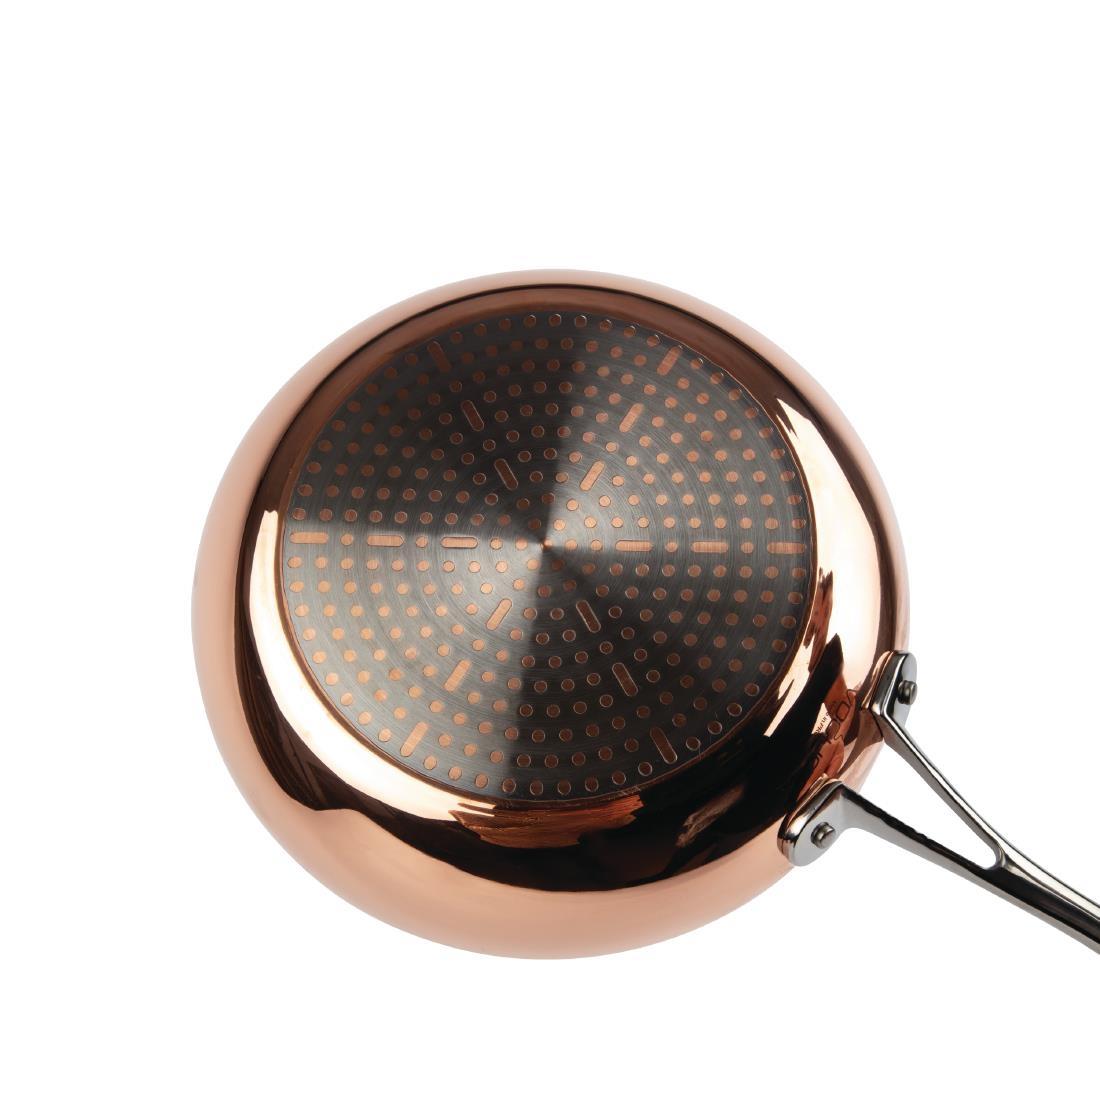 Vogue Tri Wall Copper Frying Pan 240mm - CM679  - 4